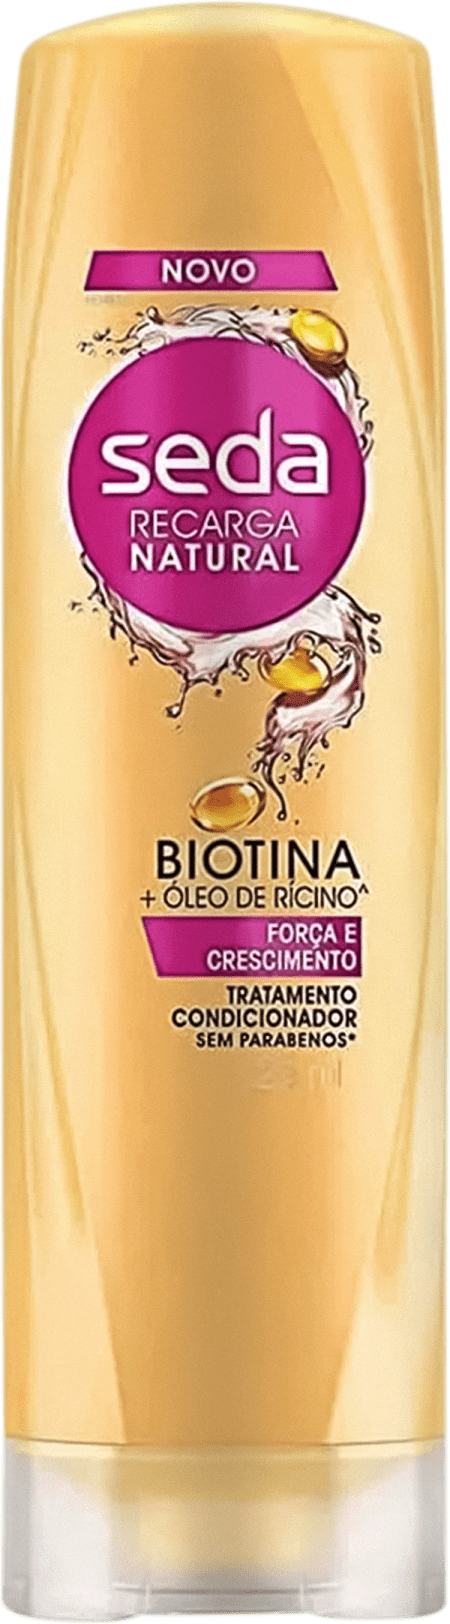 Shampoo Seda Recarga Natural Biotina + Oleo de Ricino 325ml